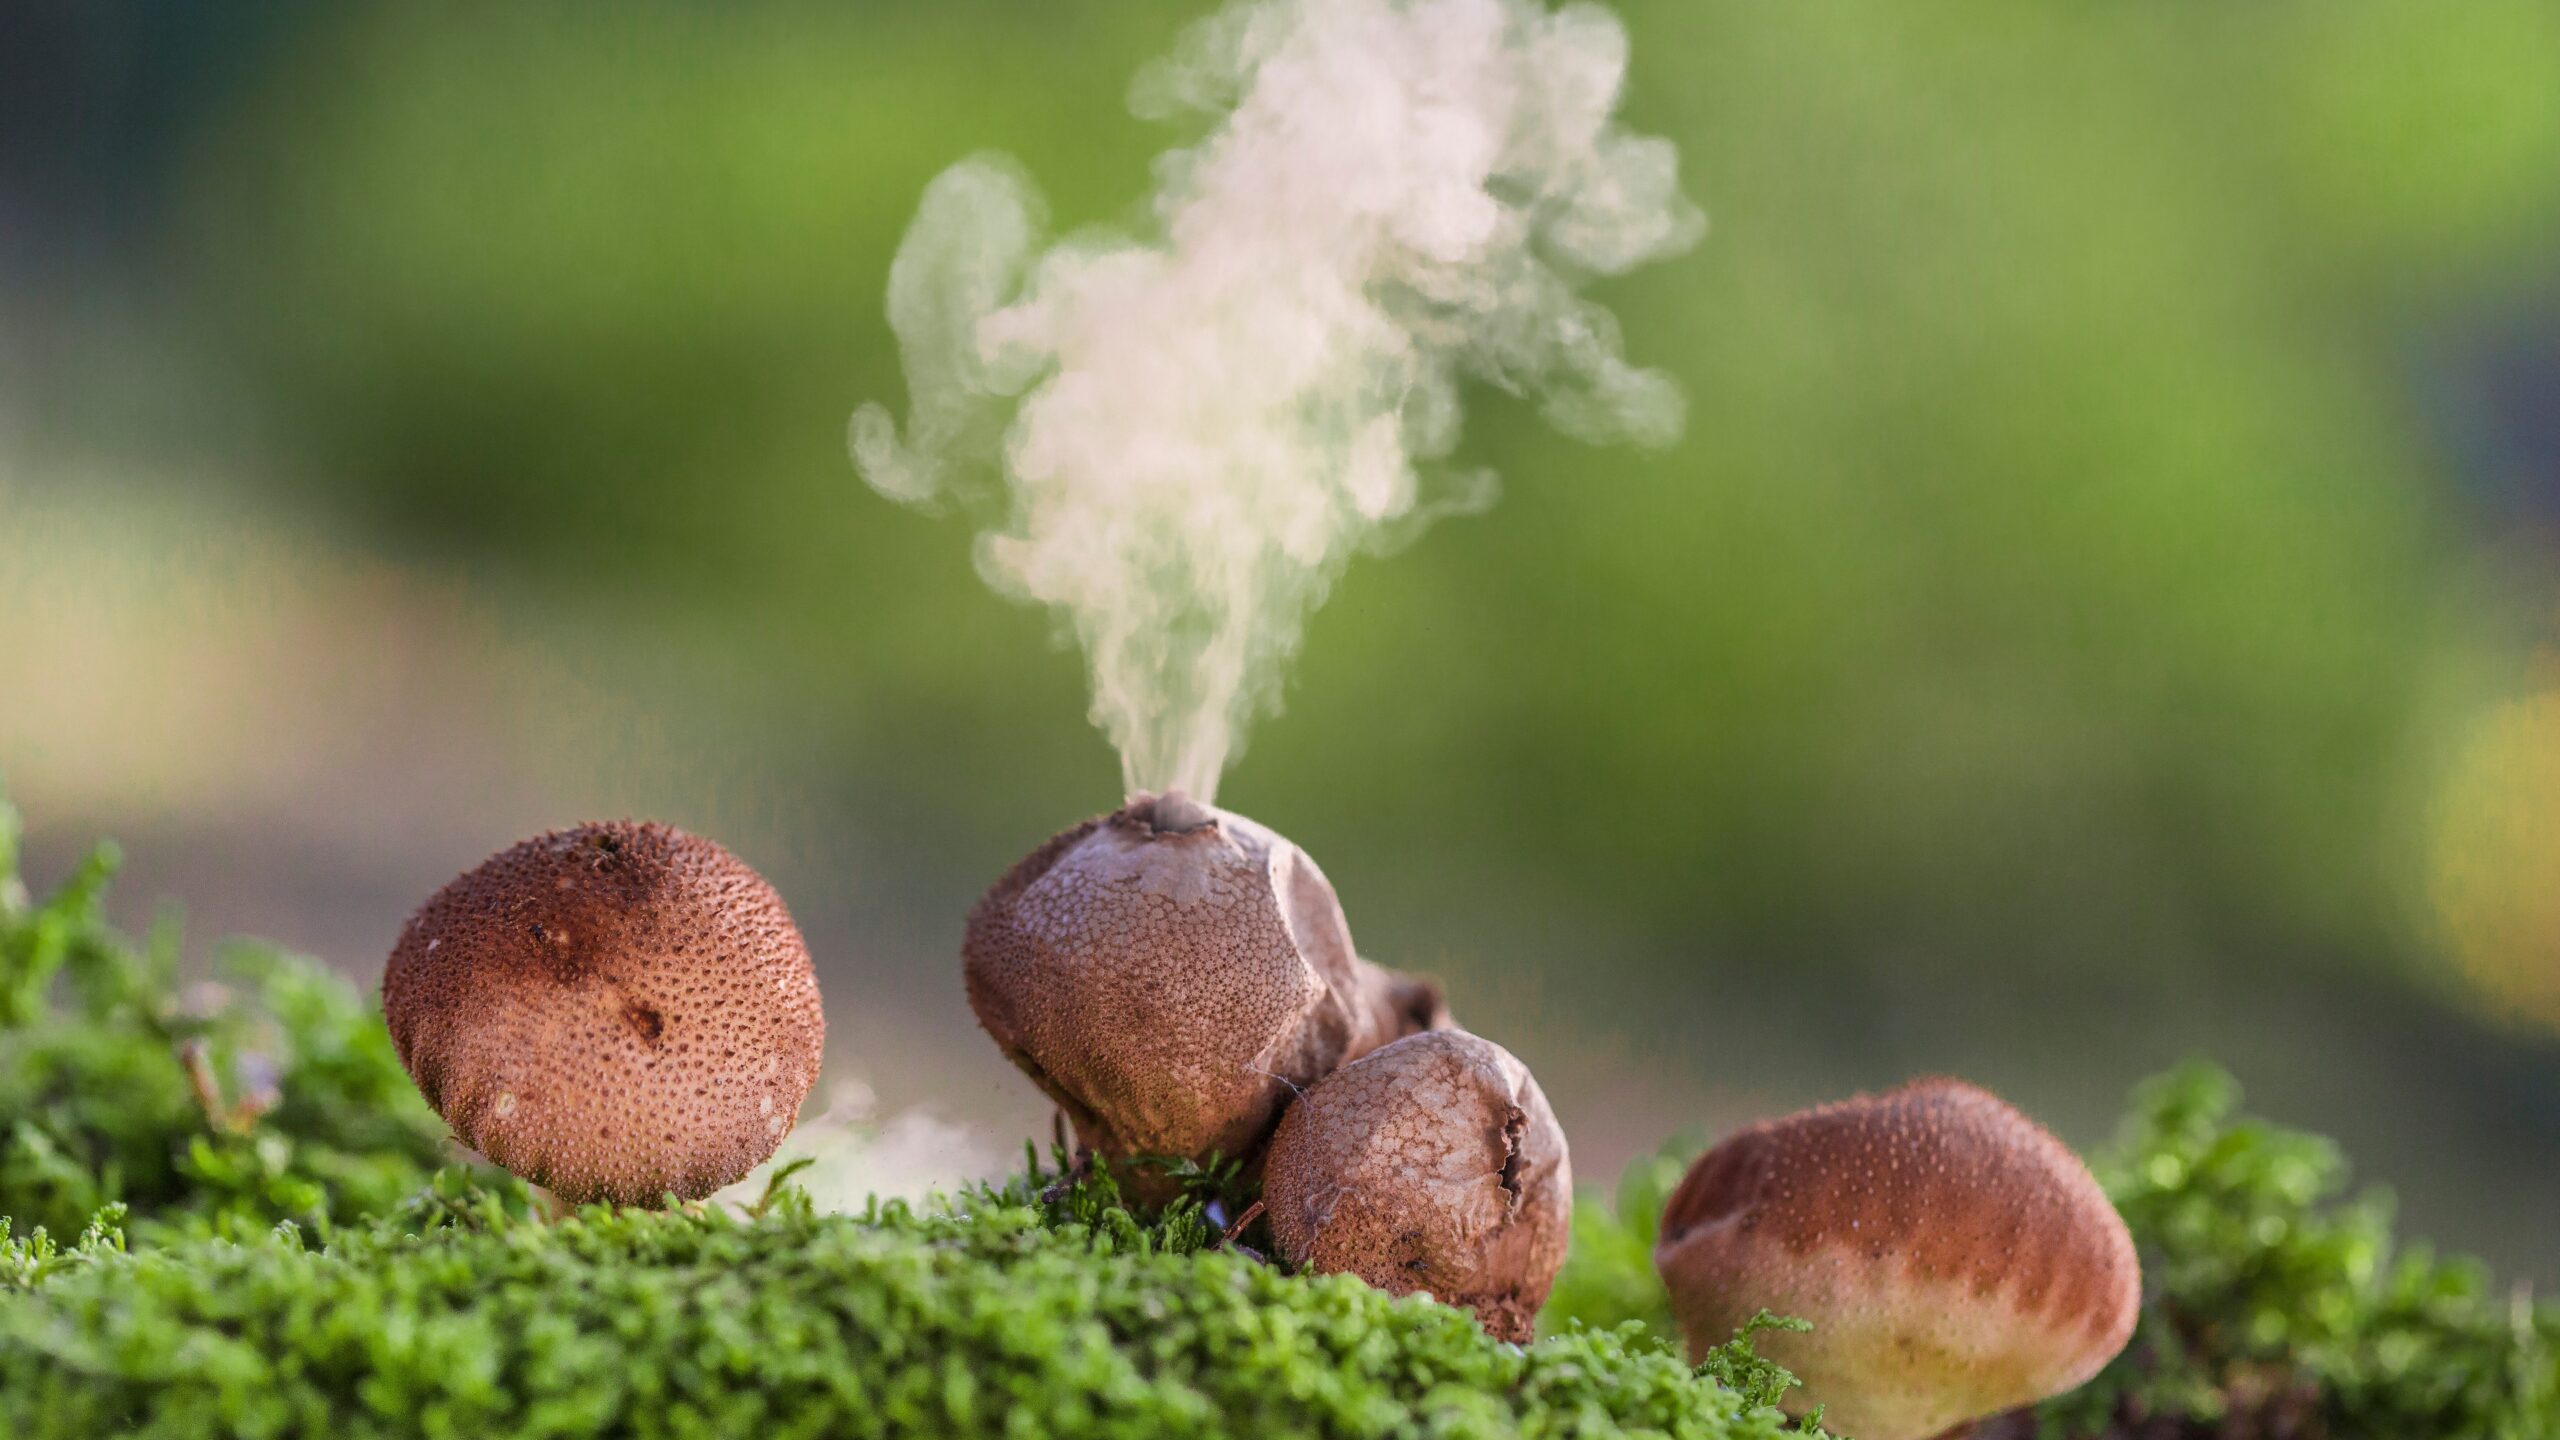 Puffball fungi releasing spores.